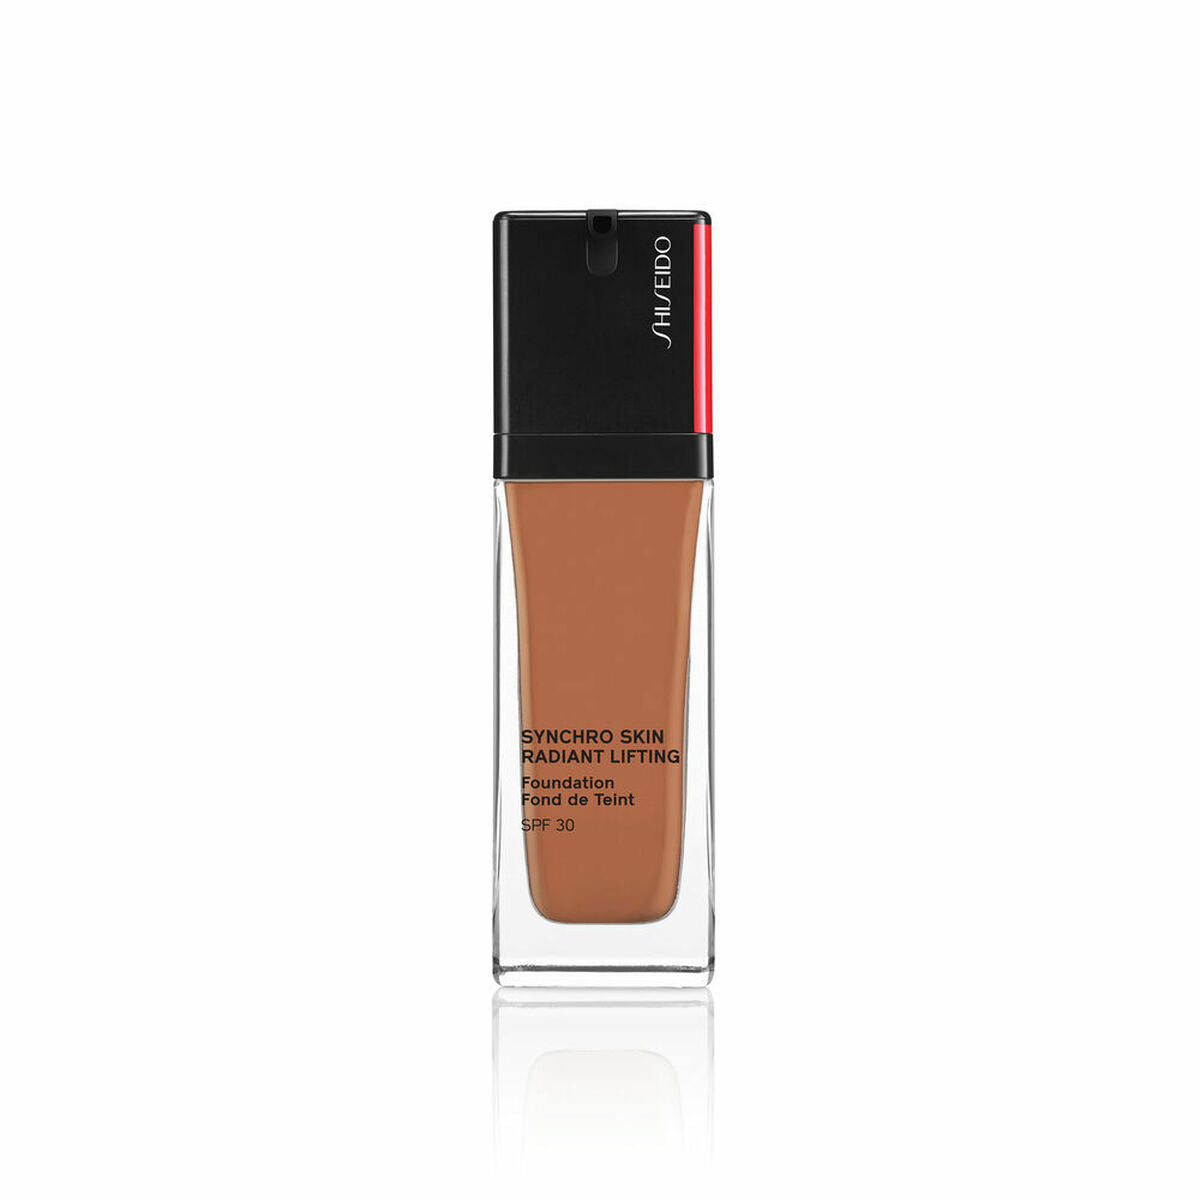 Kaufe Fluid Makeup Basis Synchro Skin Radiant Lifting Shiseido 30 ml bei AWK Flagship um € 55.00